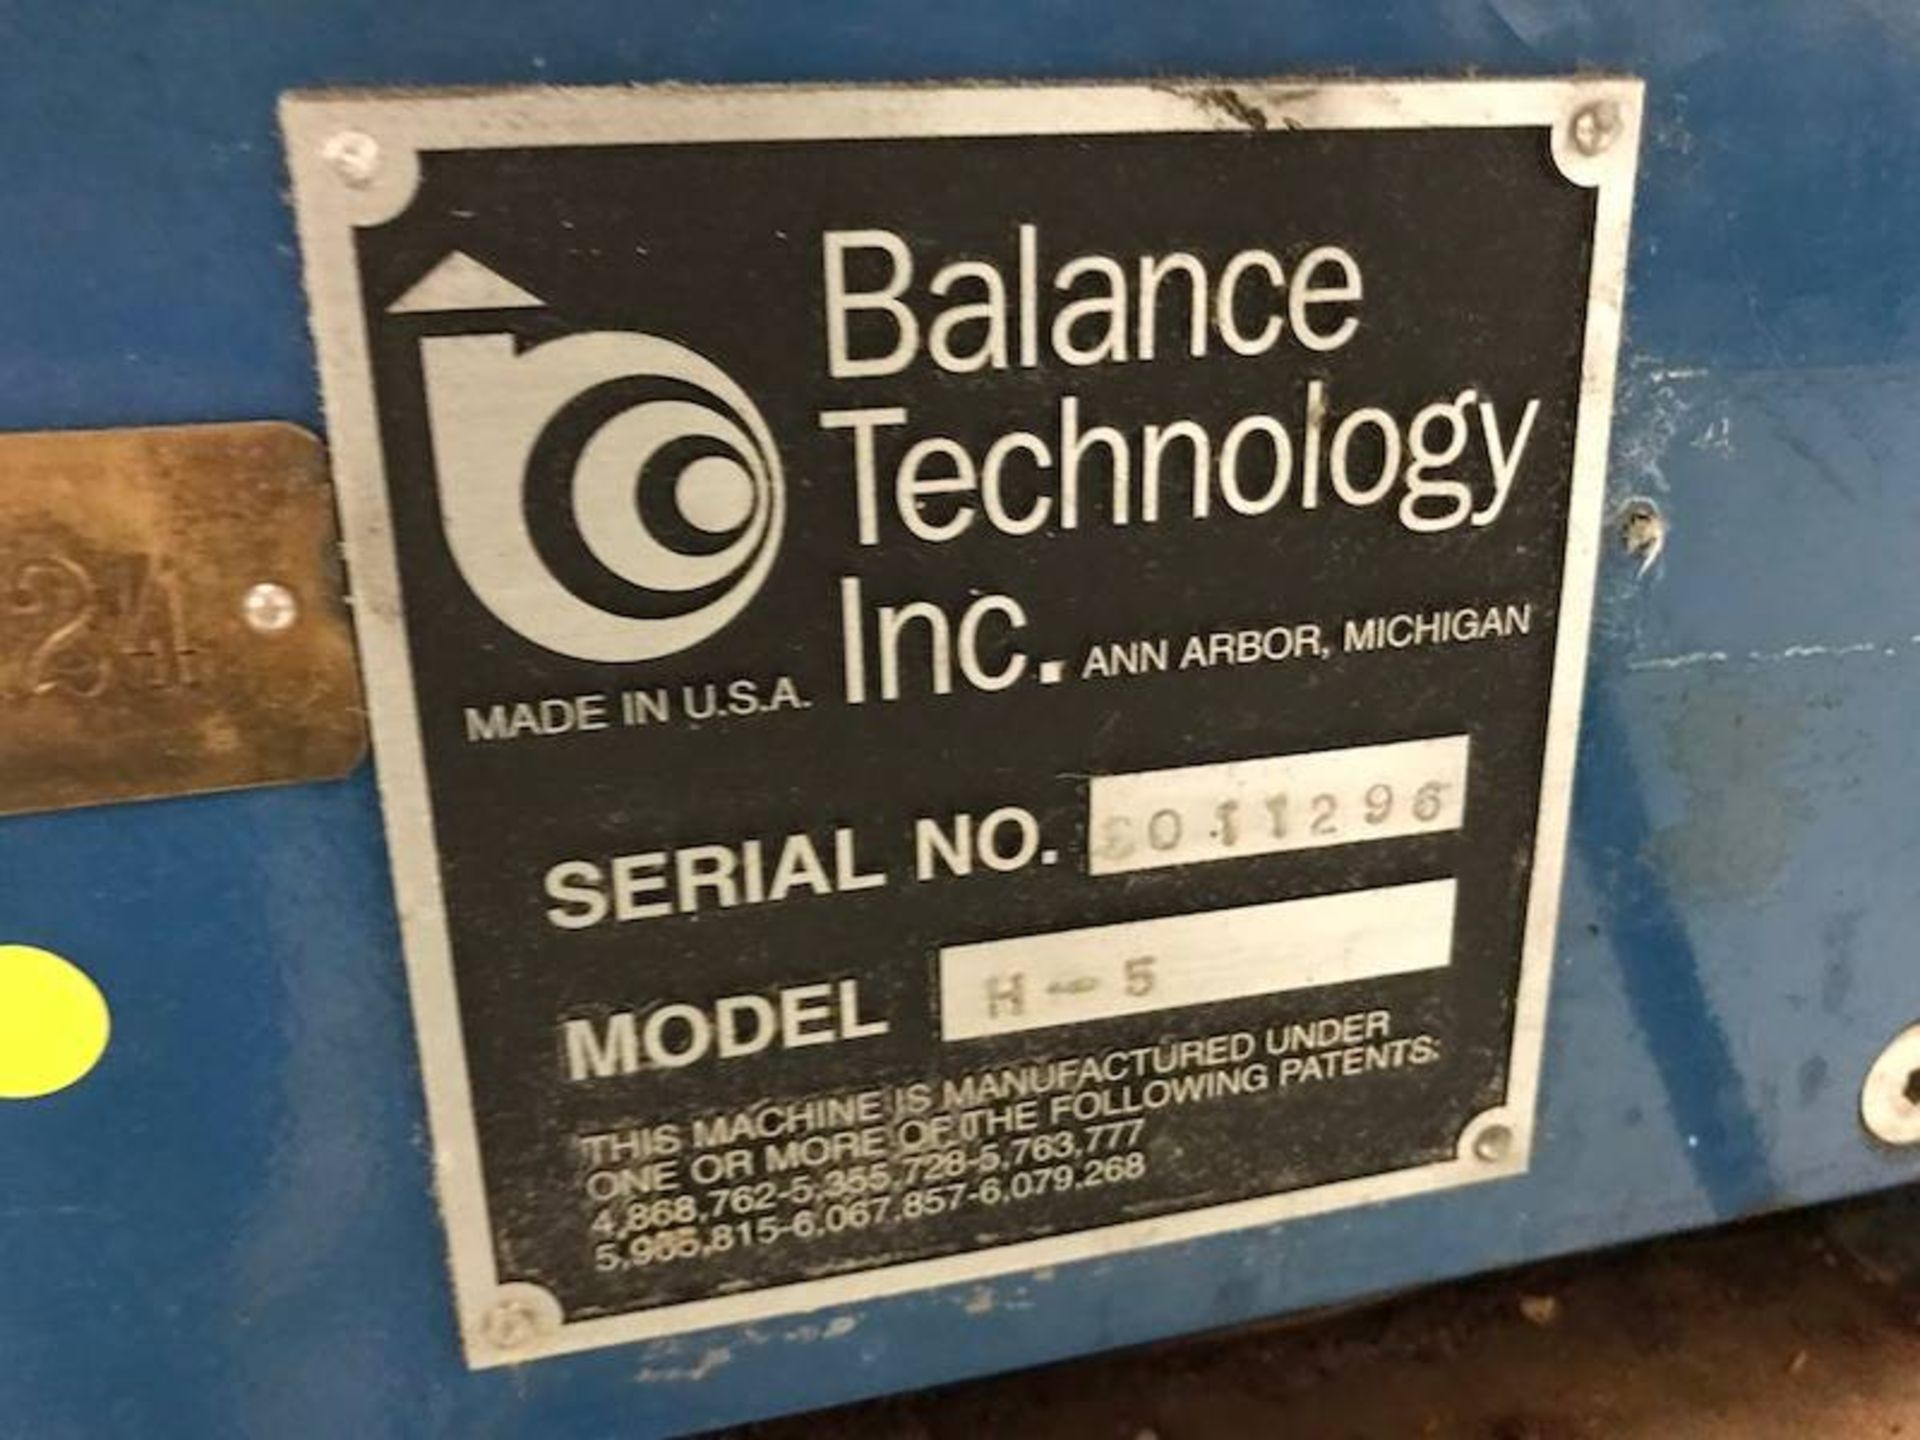 Balance Technology Inc. H-5 Lathe Cell Balancer - Image 4 of 4